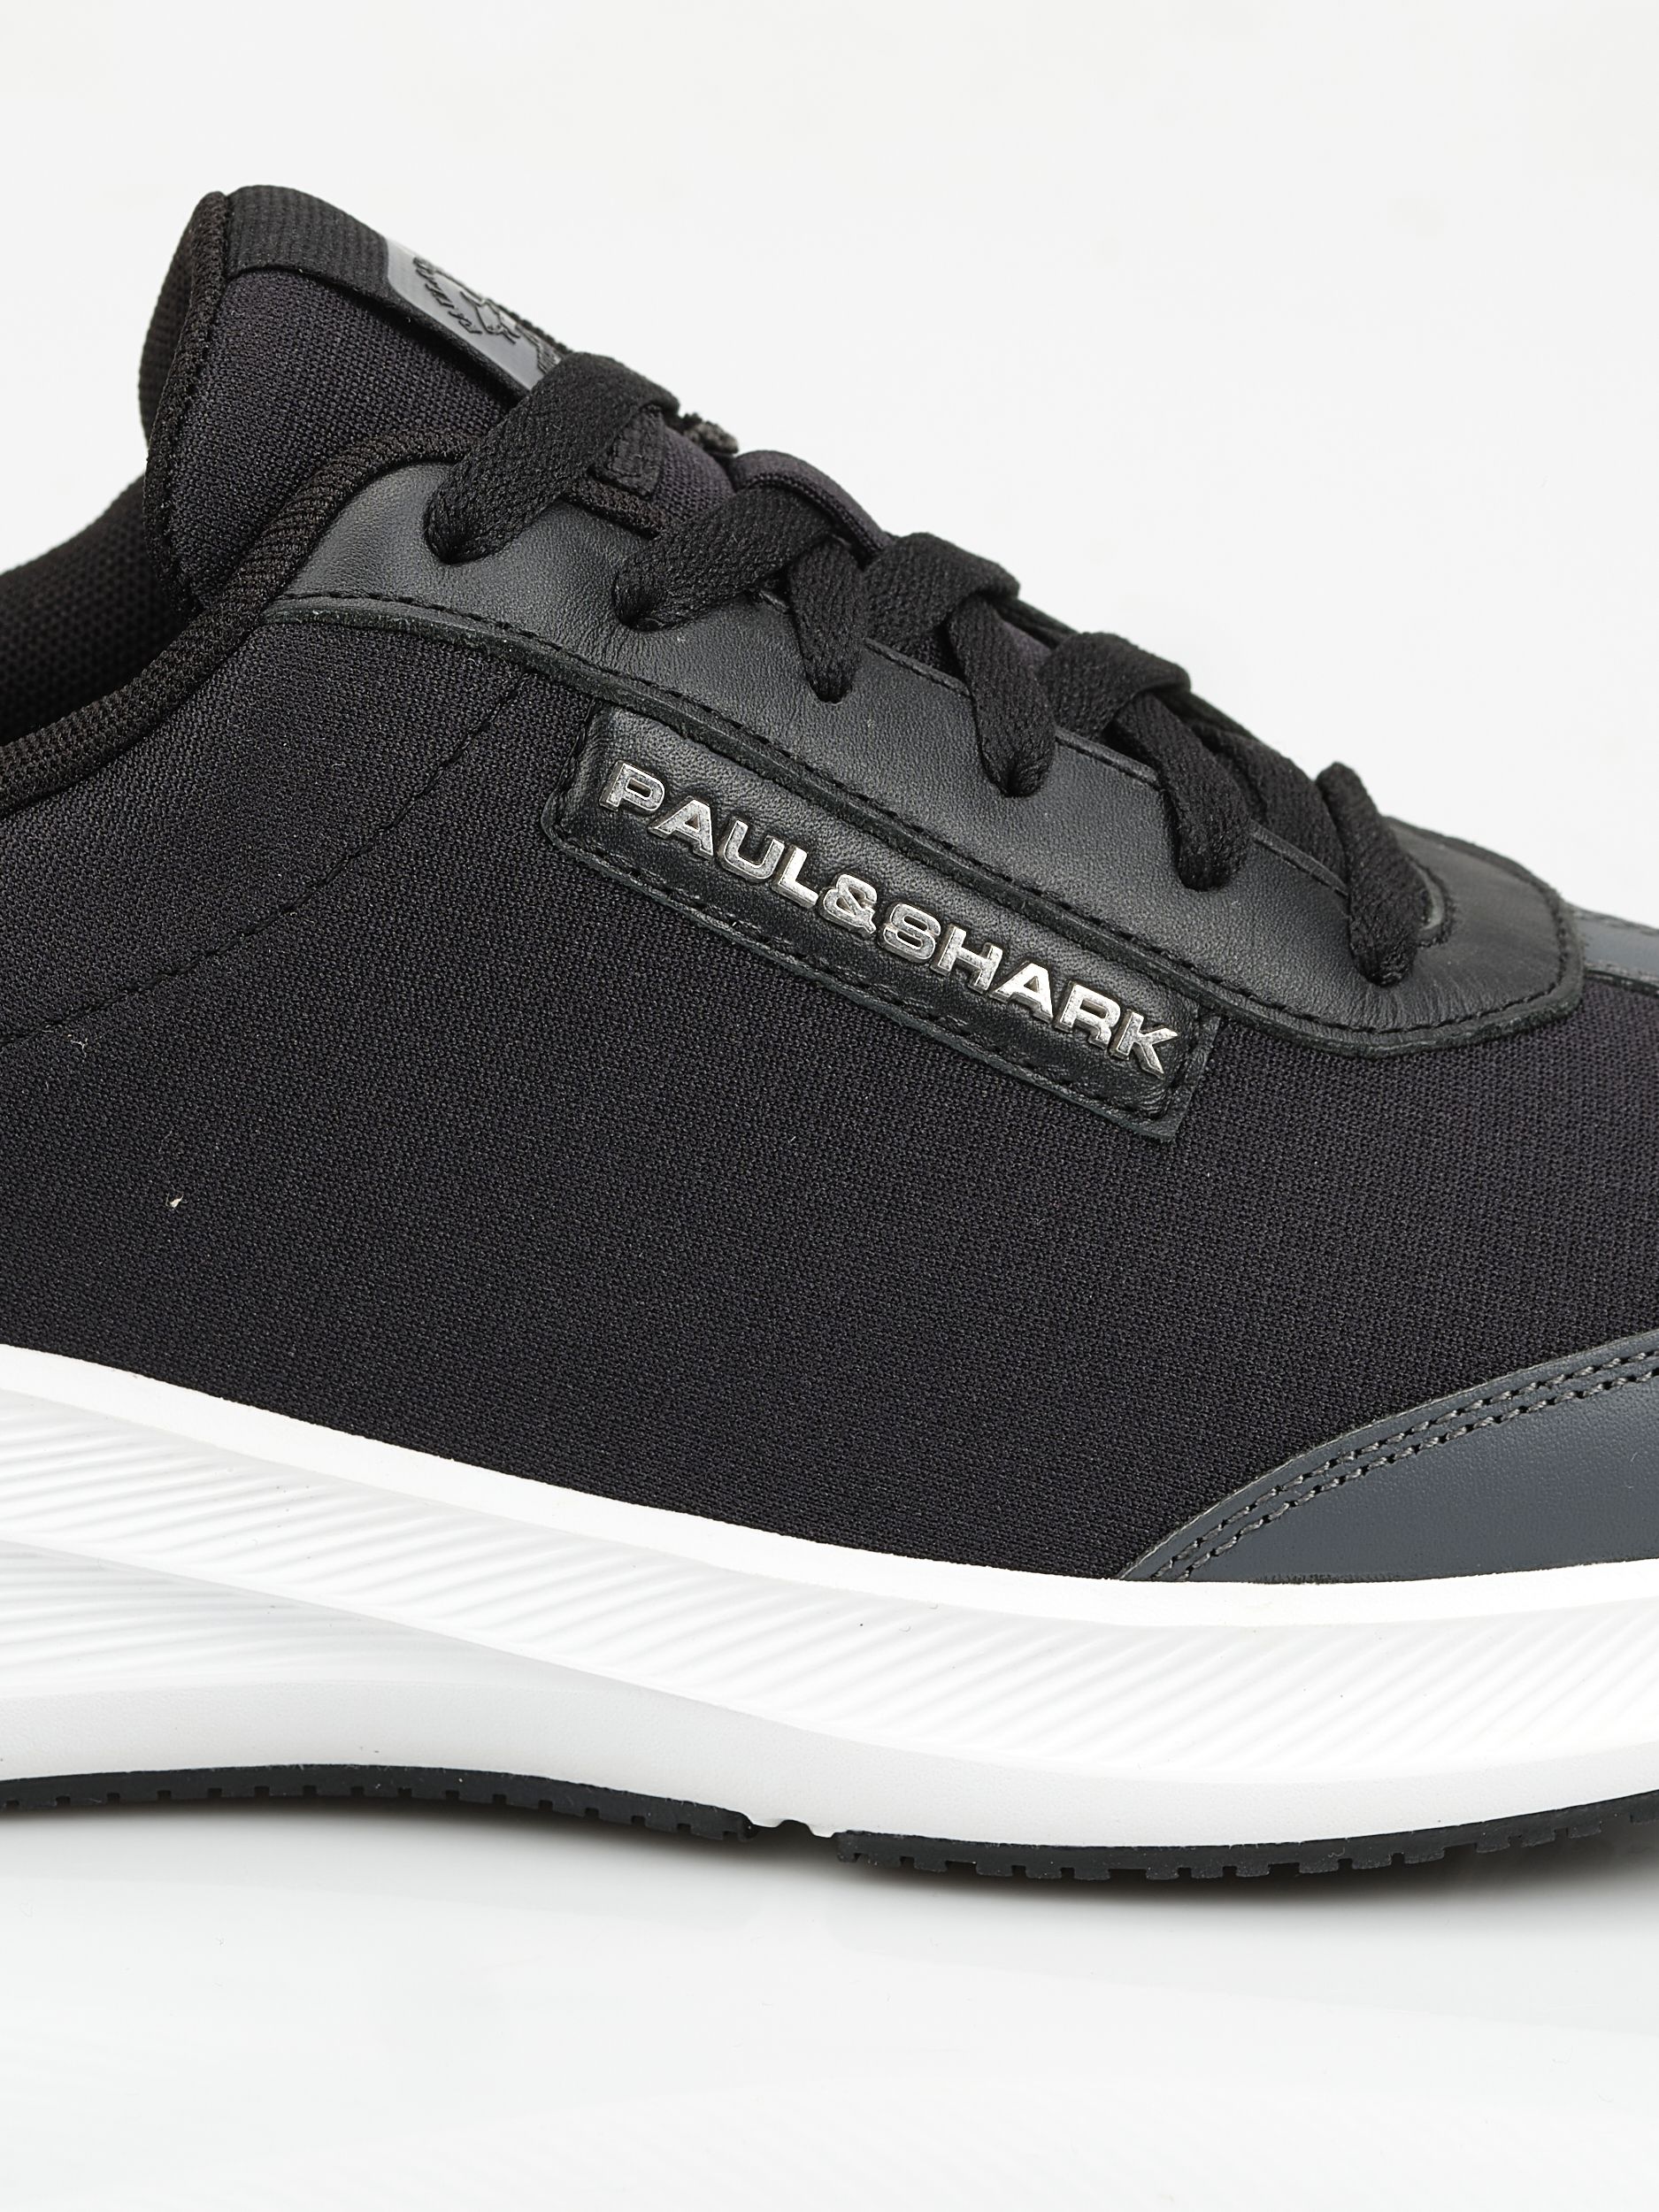 Paul & Shark Sneakers Zwart 091208-001-41